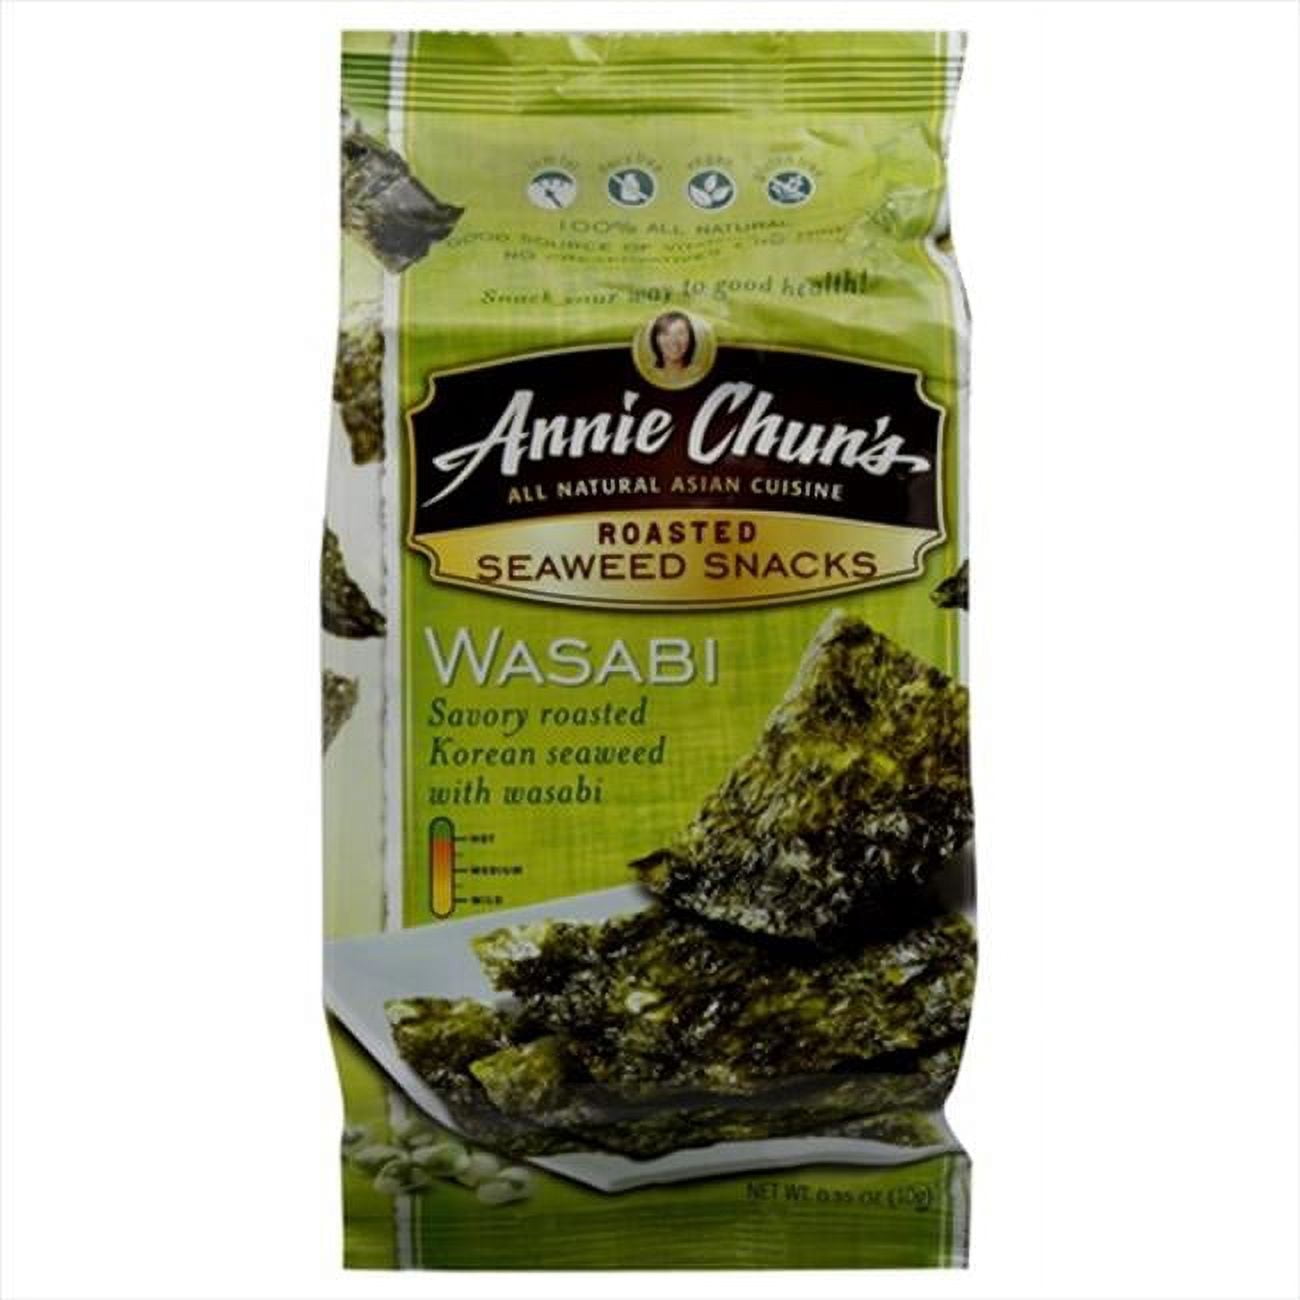 Annie Chun's Roasted Seaweed Snacks, Wasabi, 0.35 oz Bag